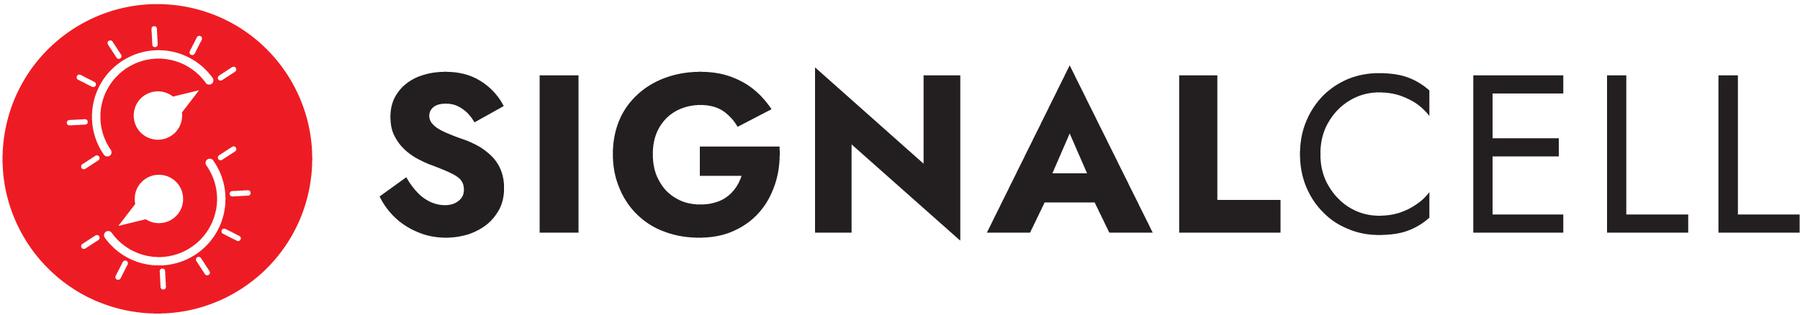 signal cell logo